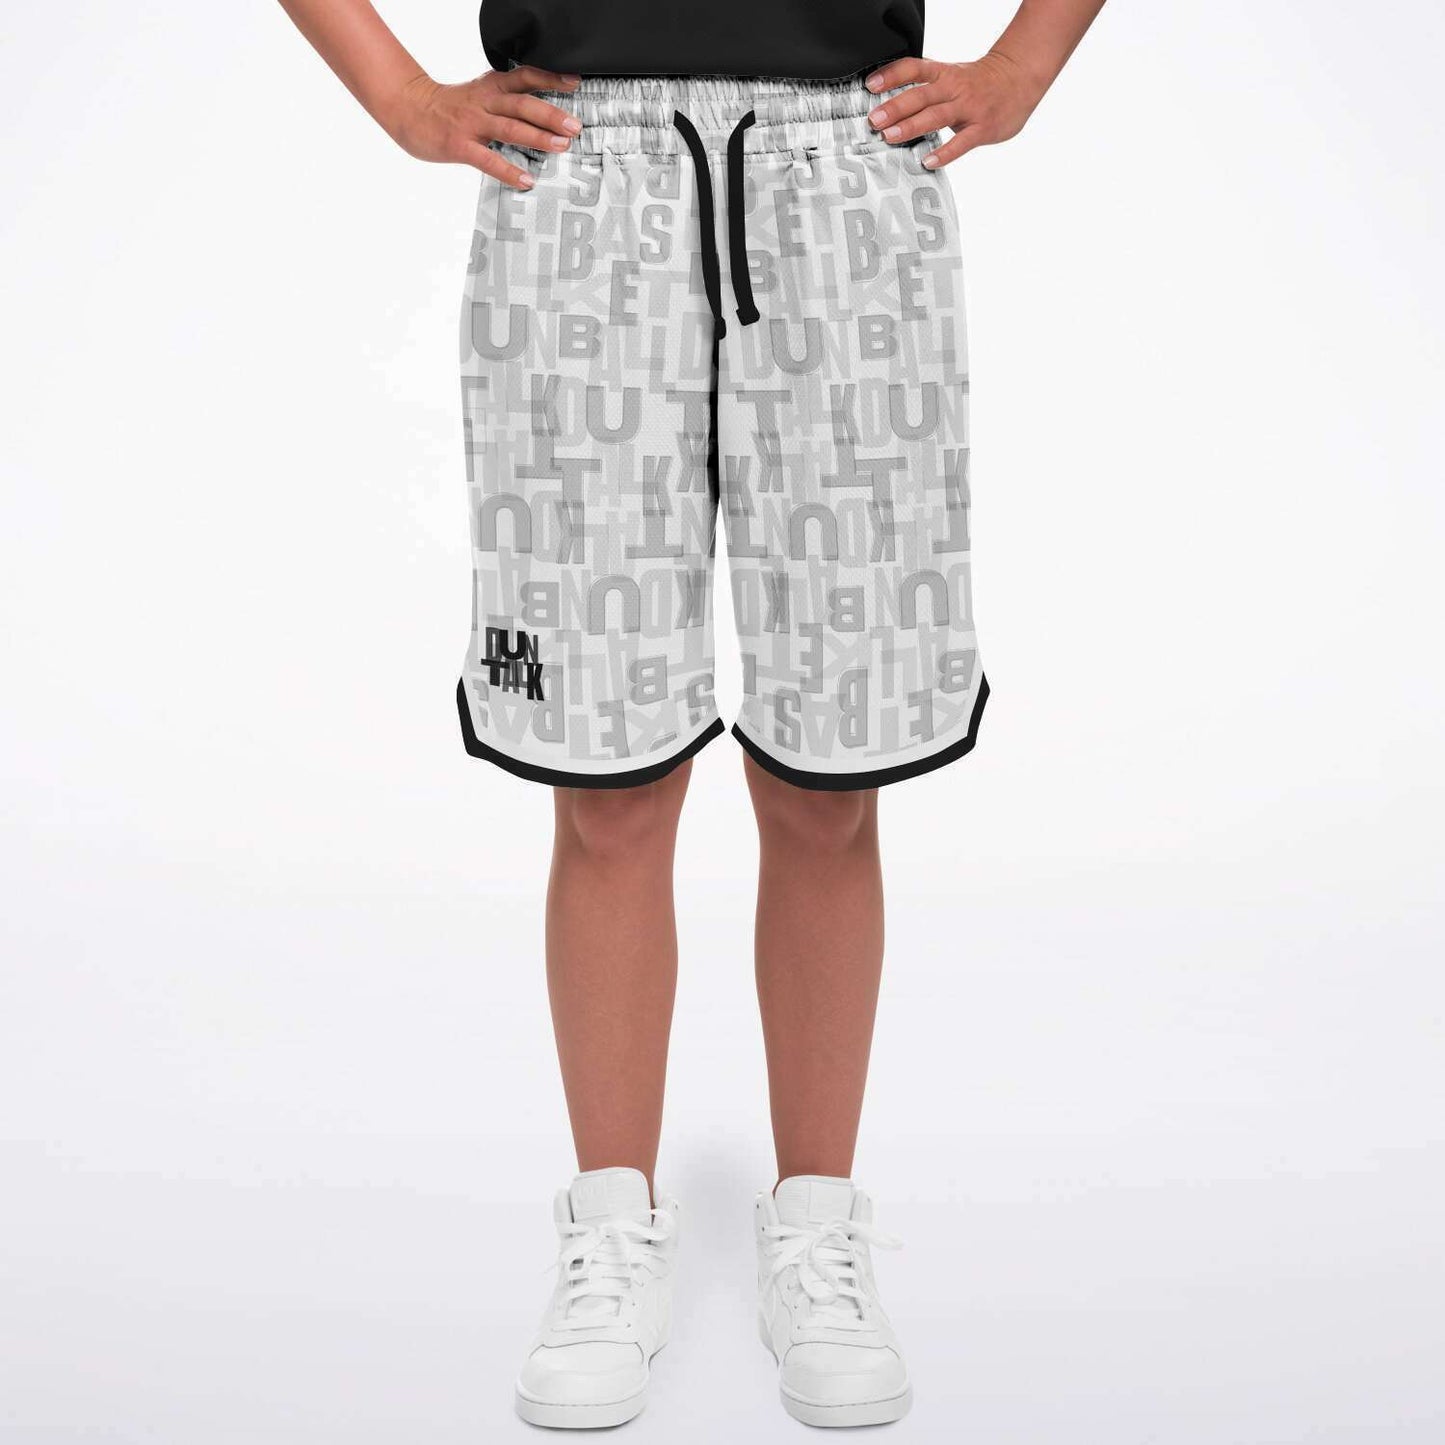 Duntalk "Court Vision" Basketball Shorts - White